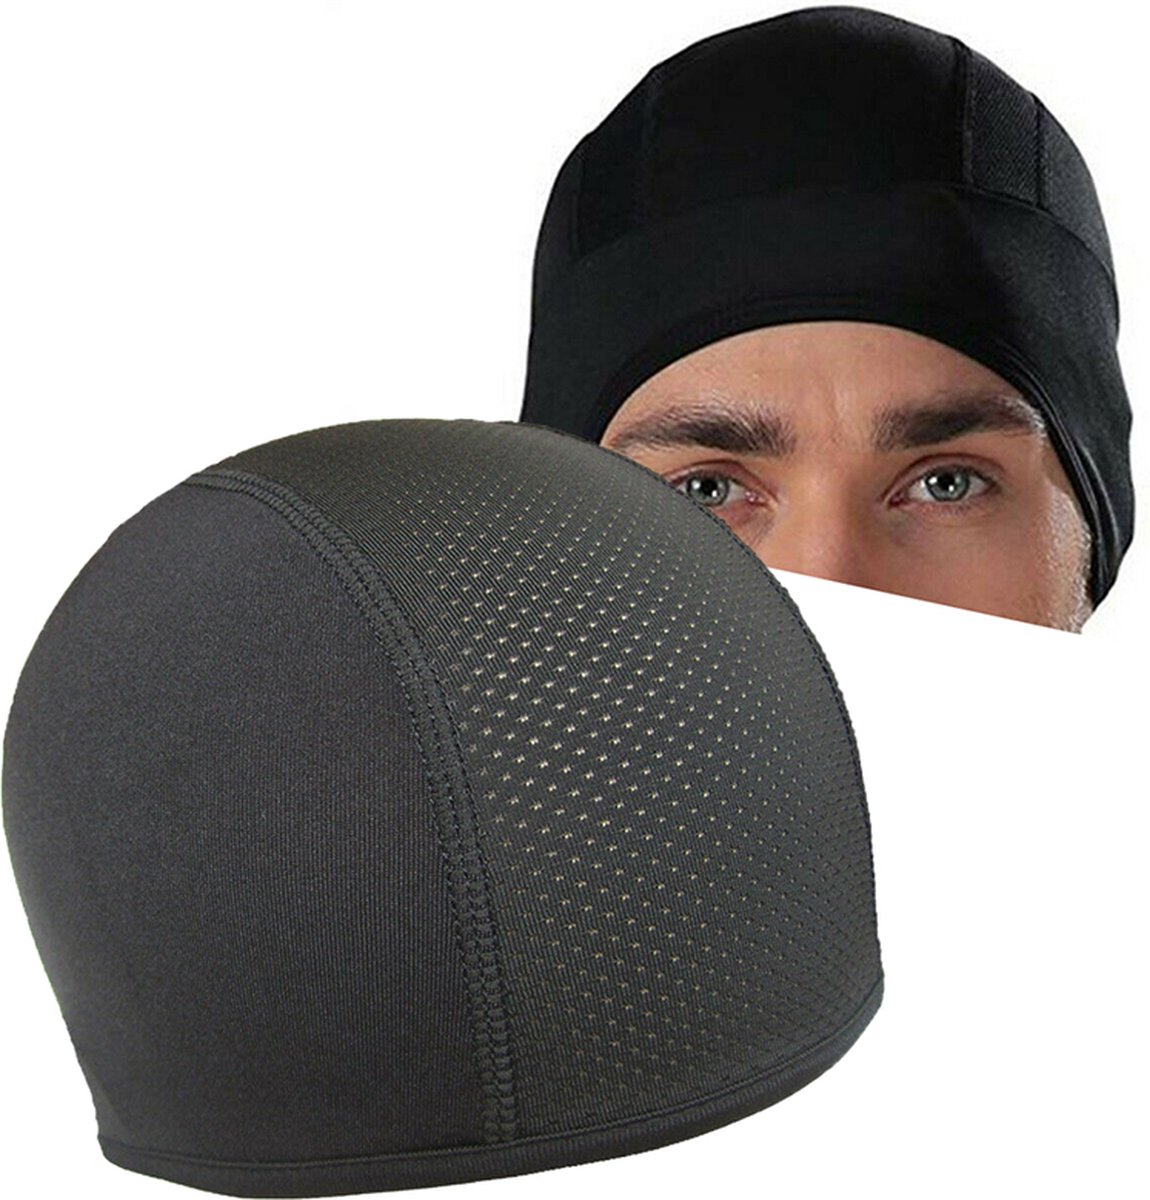 Helm Haarnet I Haarkapje Voor Helm I Motor Muts I Fiets Muts I Helm Muts I Ventilerend I Zwart - Cheaperito